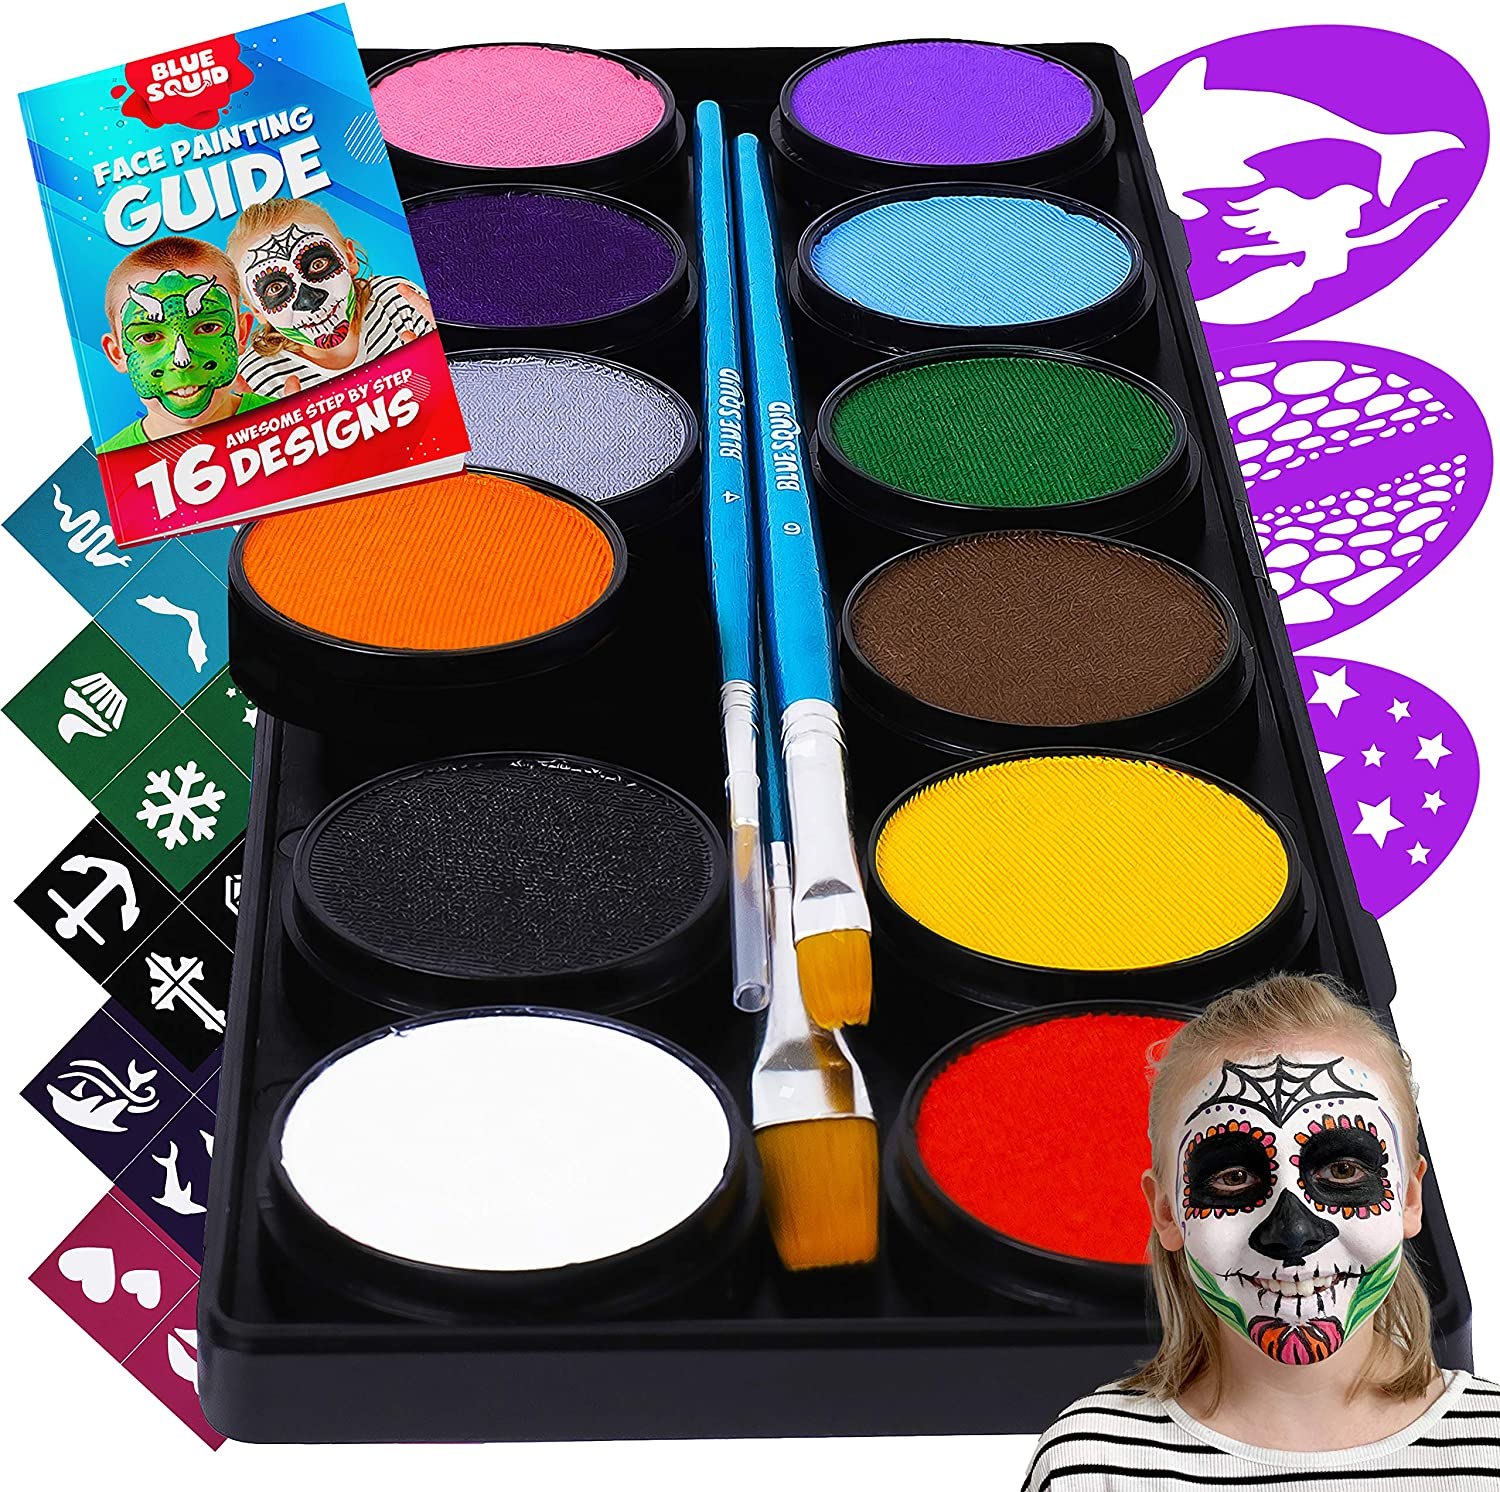 Zenovika Face Paint Kit for Kids - 60 Jumbo Stencils, 15 Large Water Based Paints, 2 Glitters - Halloween Makeup Kit, Professional